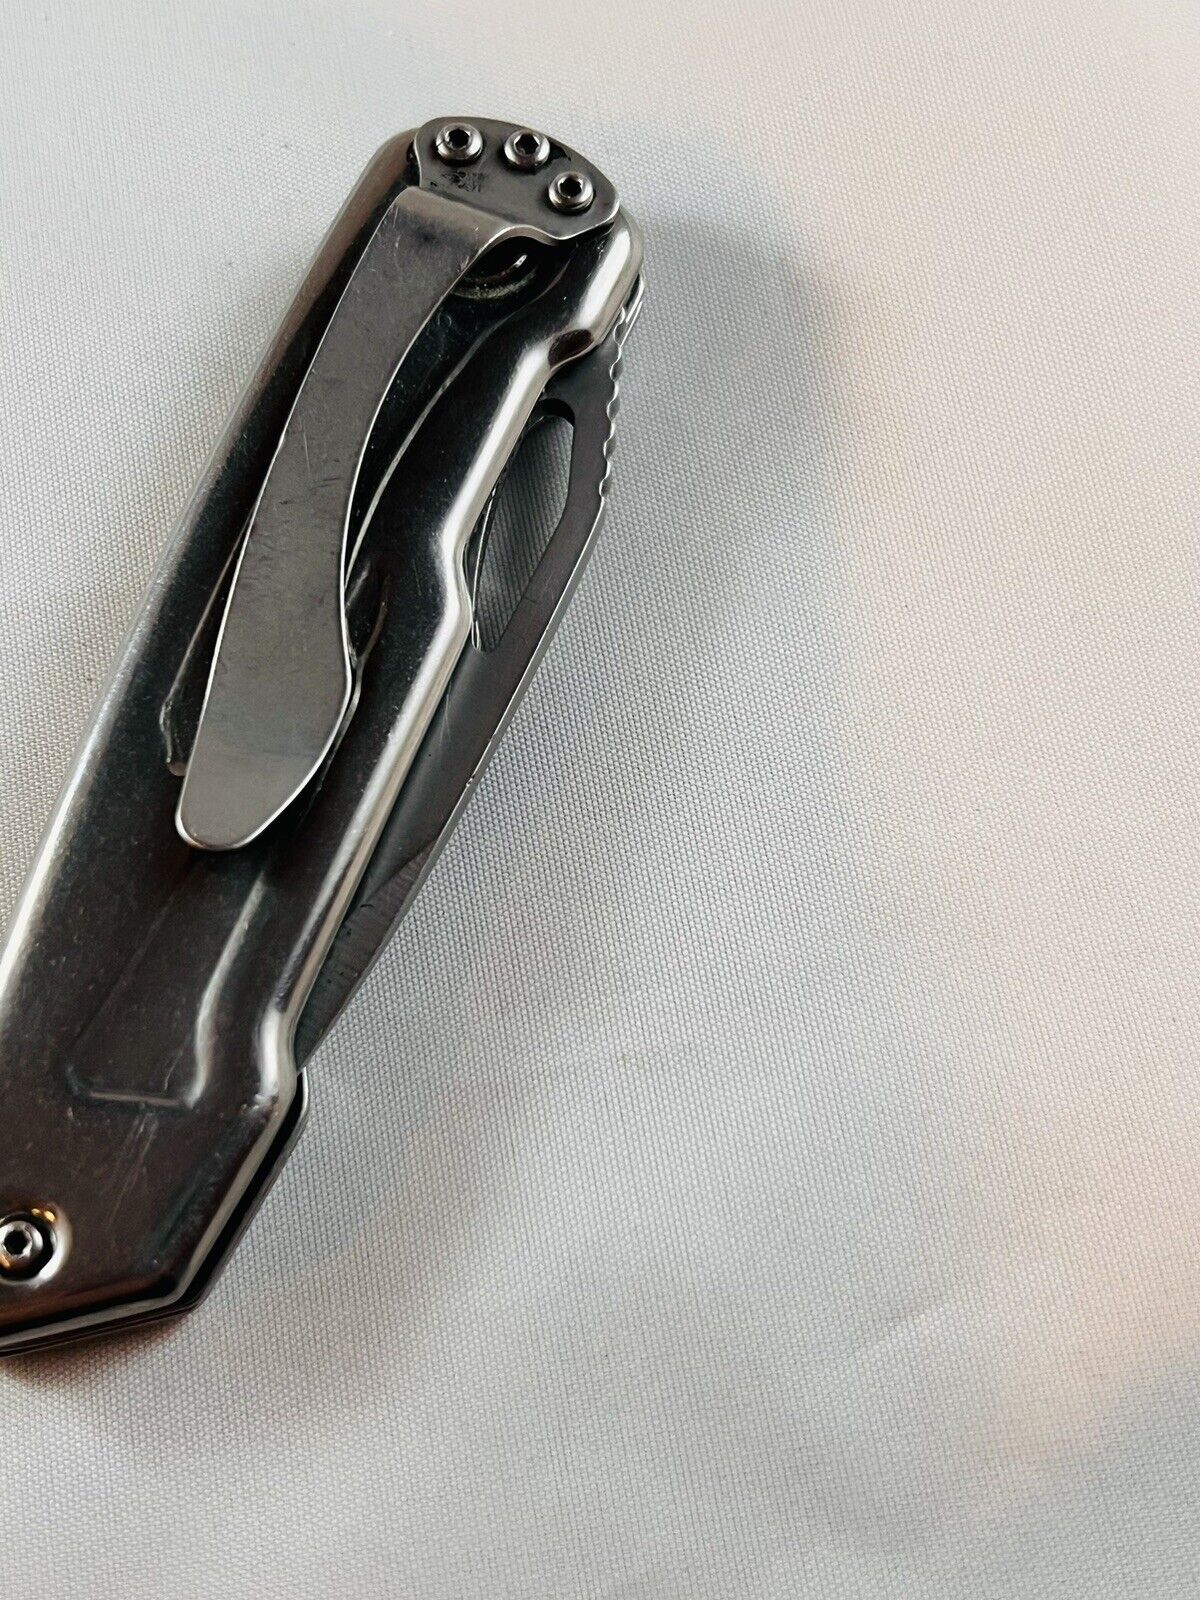 Kershaw 1600DAMBK Knives Folder Knife Damascus Black Finish Stainless